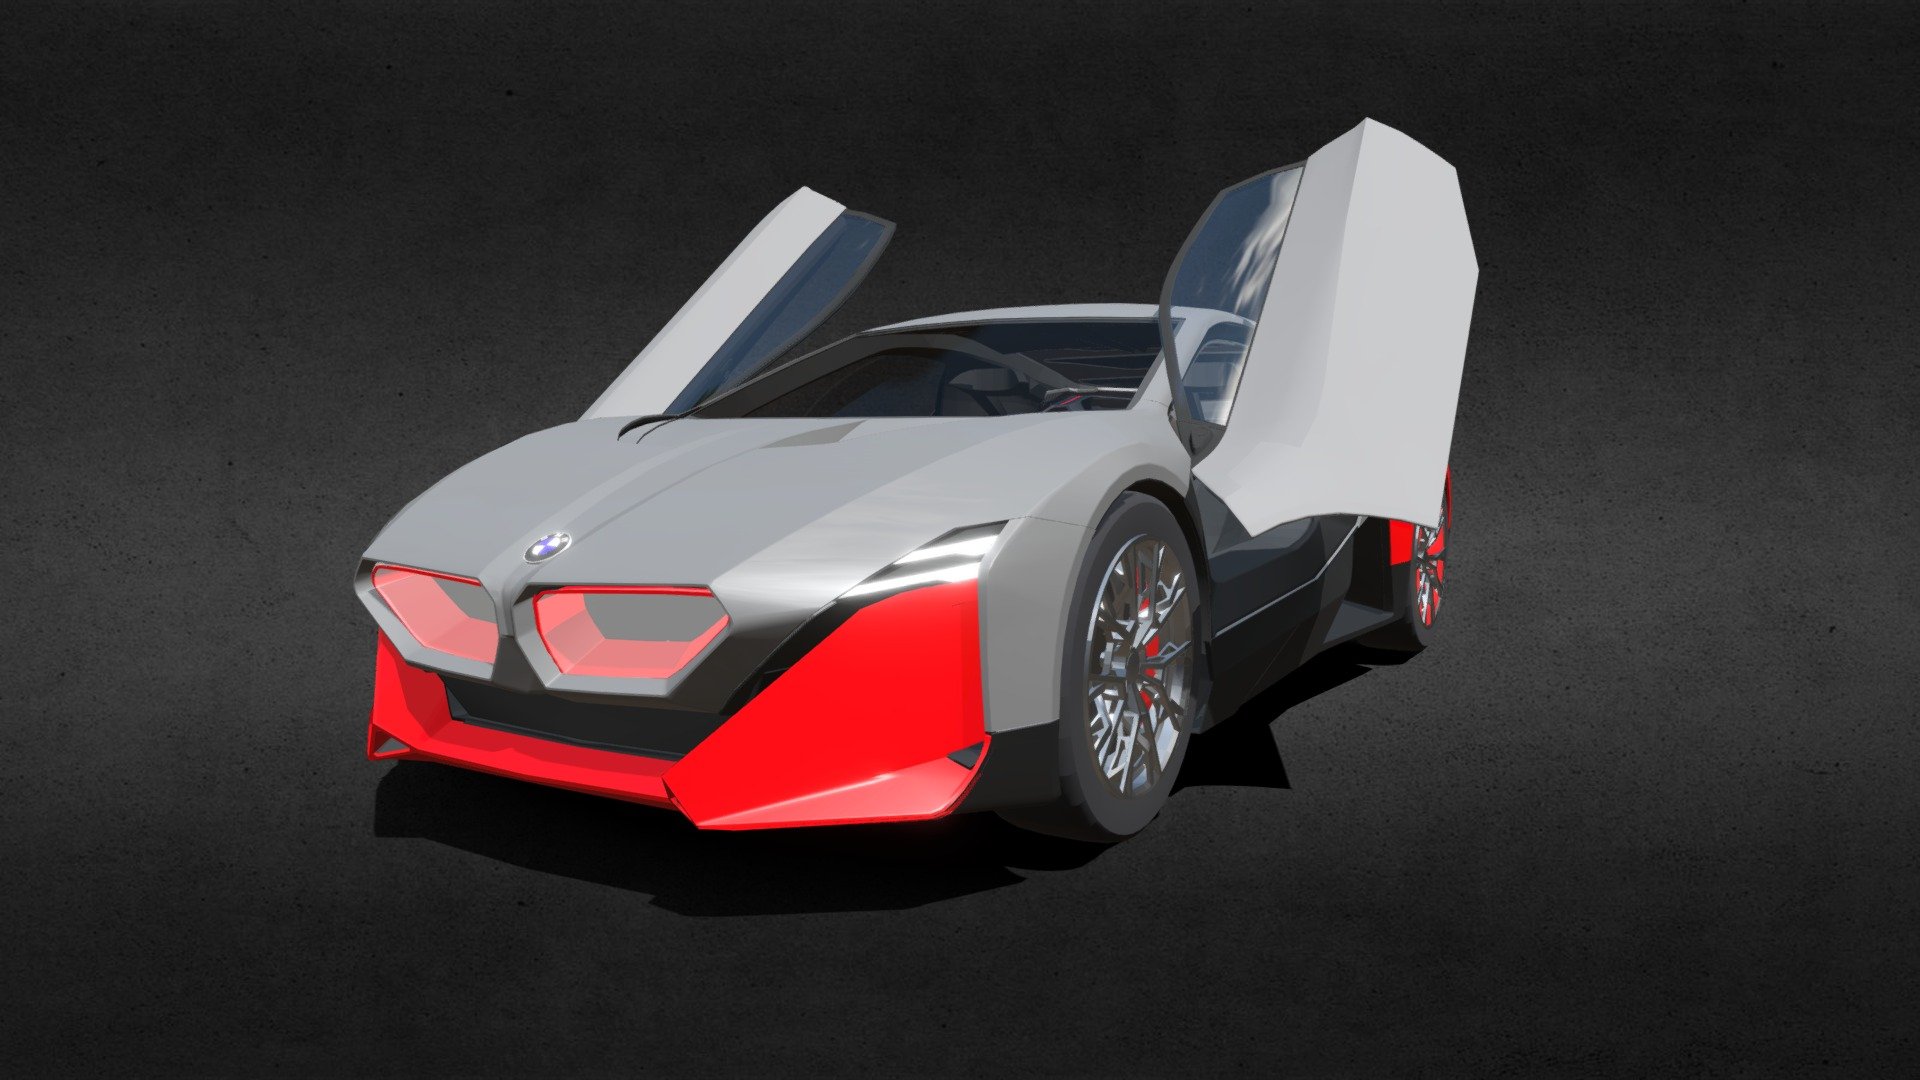 BMW Vision Next 100 concept unveiled - Drive